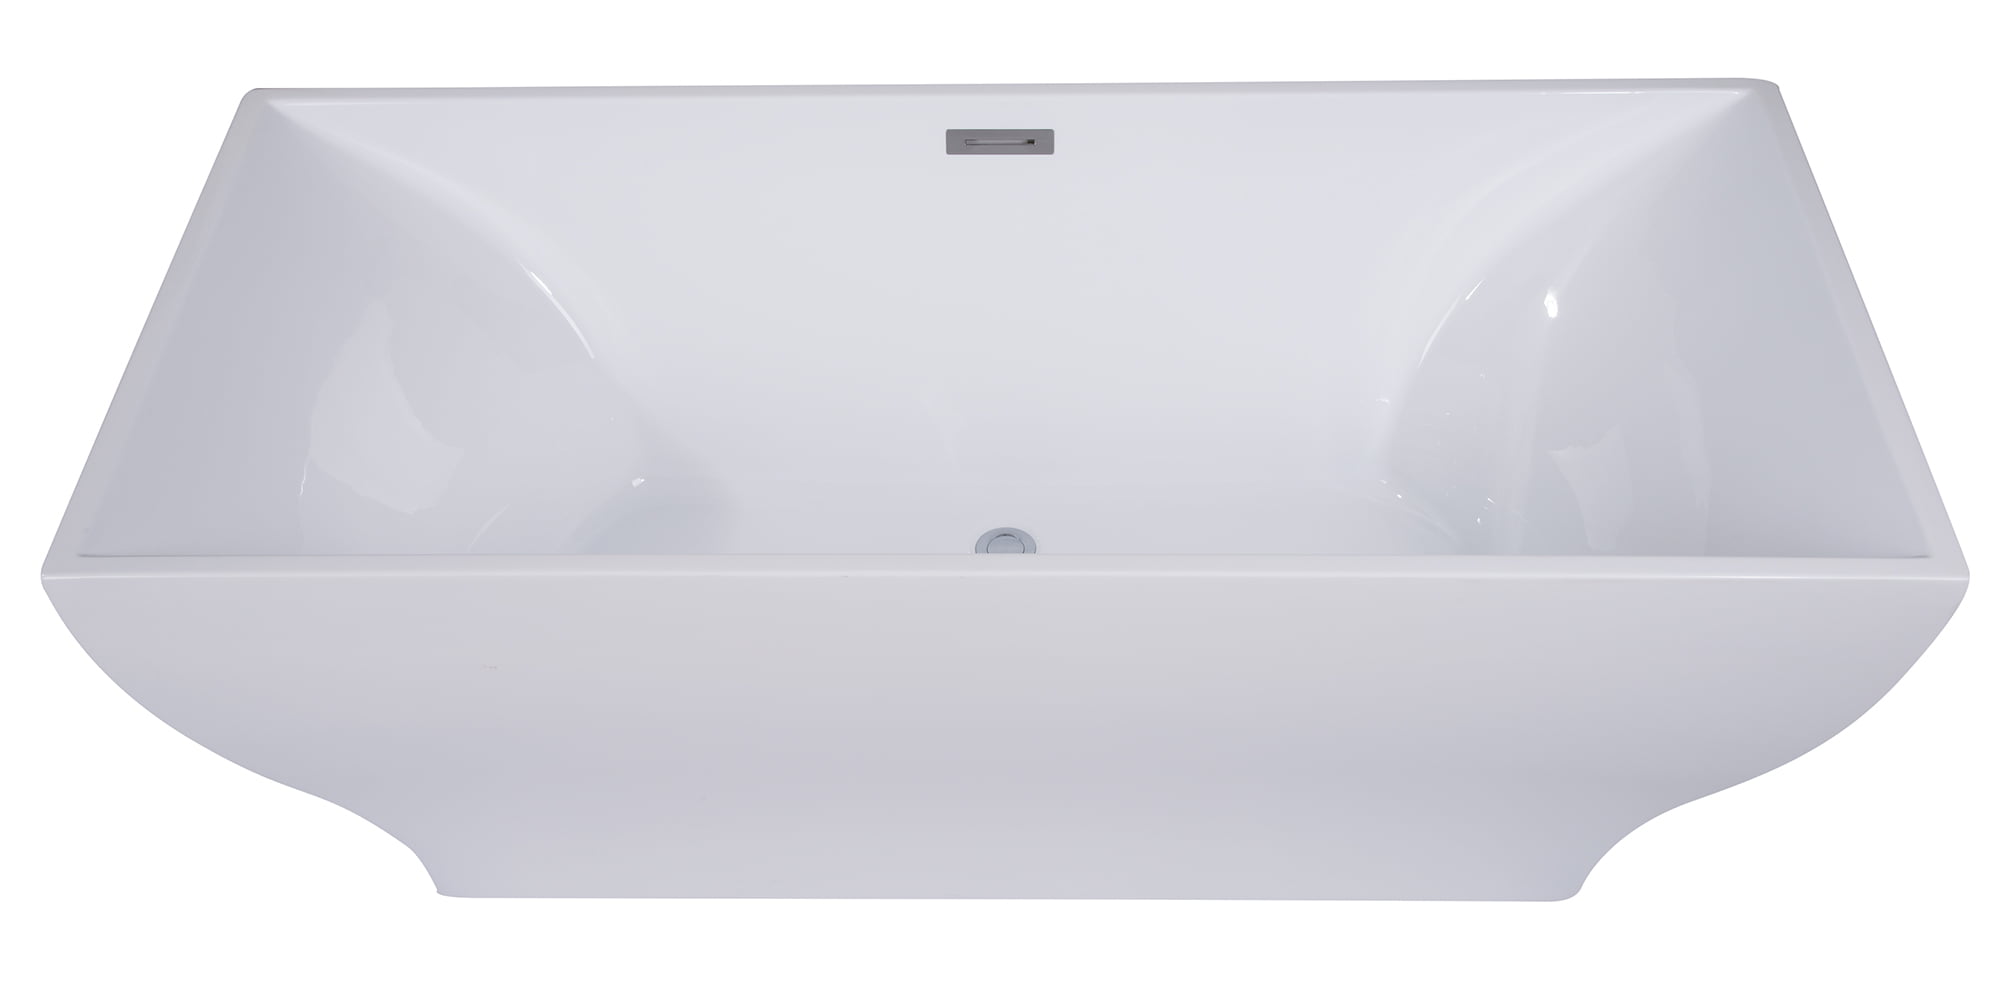 Ab8840 67 In. Universal Matte White Rectangular Acrylic Free Standing Soaking Bathtub